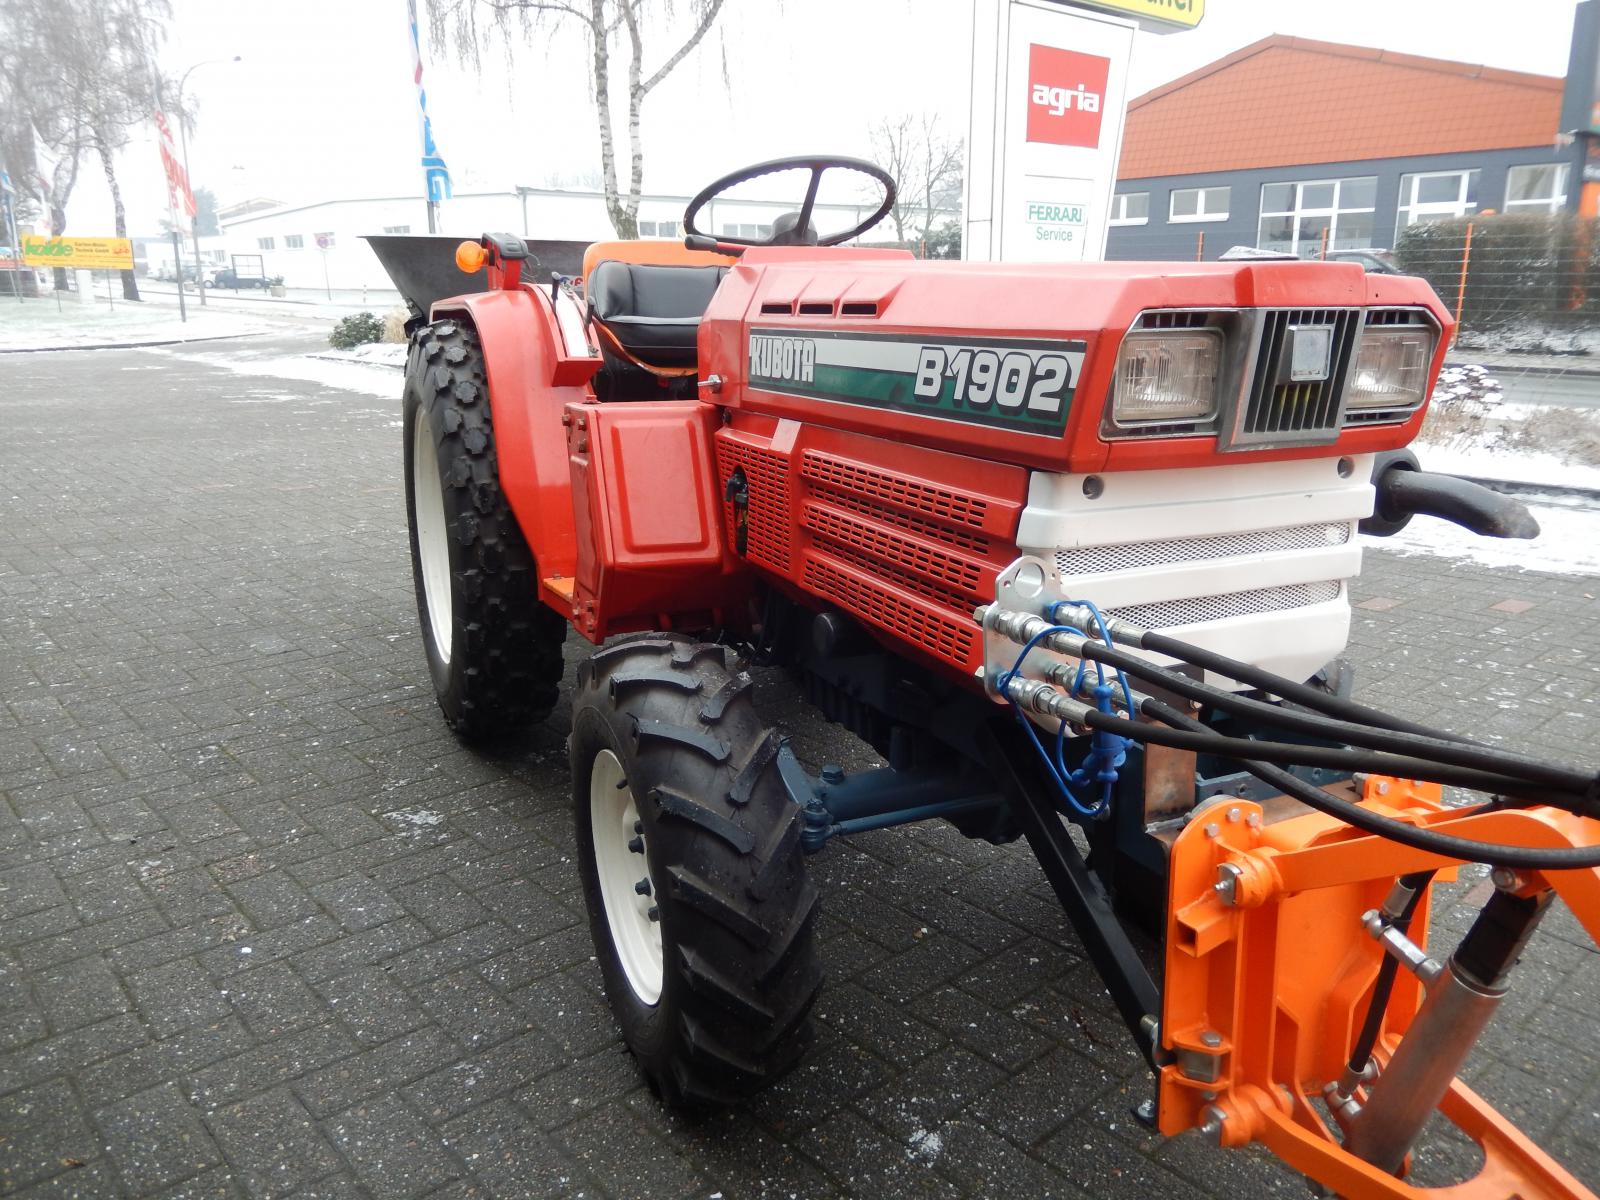 Bild 10 von 13 - Kubota B1902 Traktor - Landtechnik-Börse